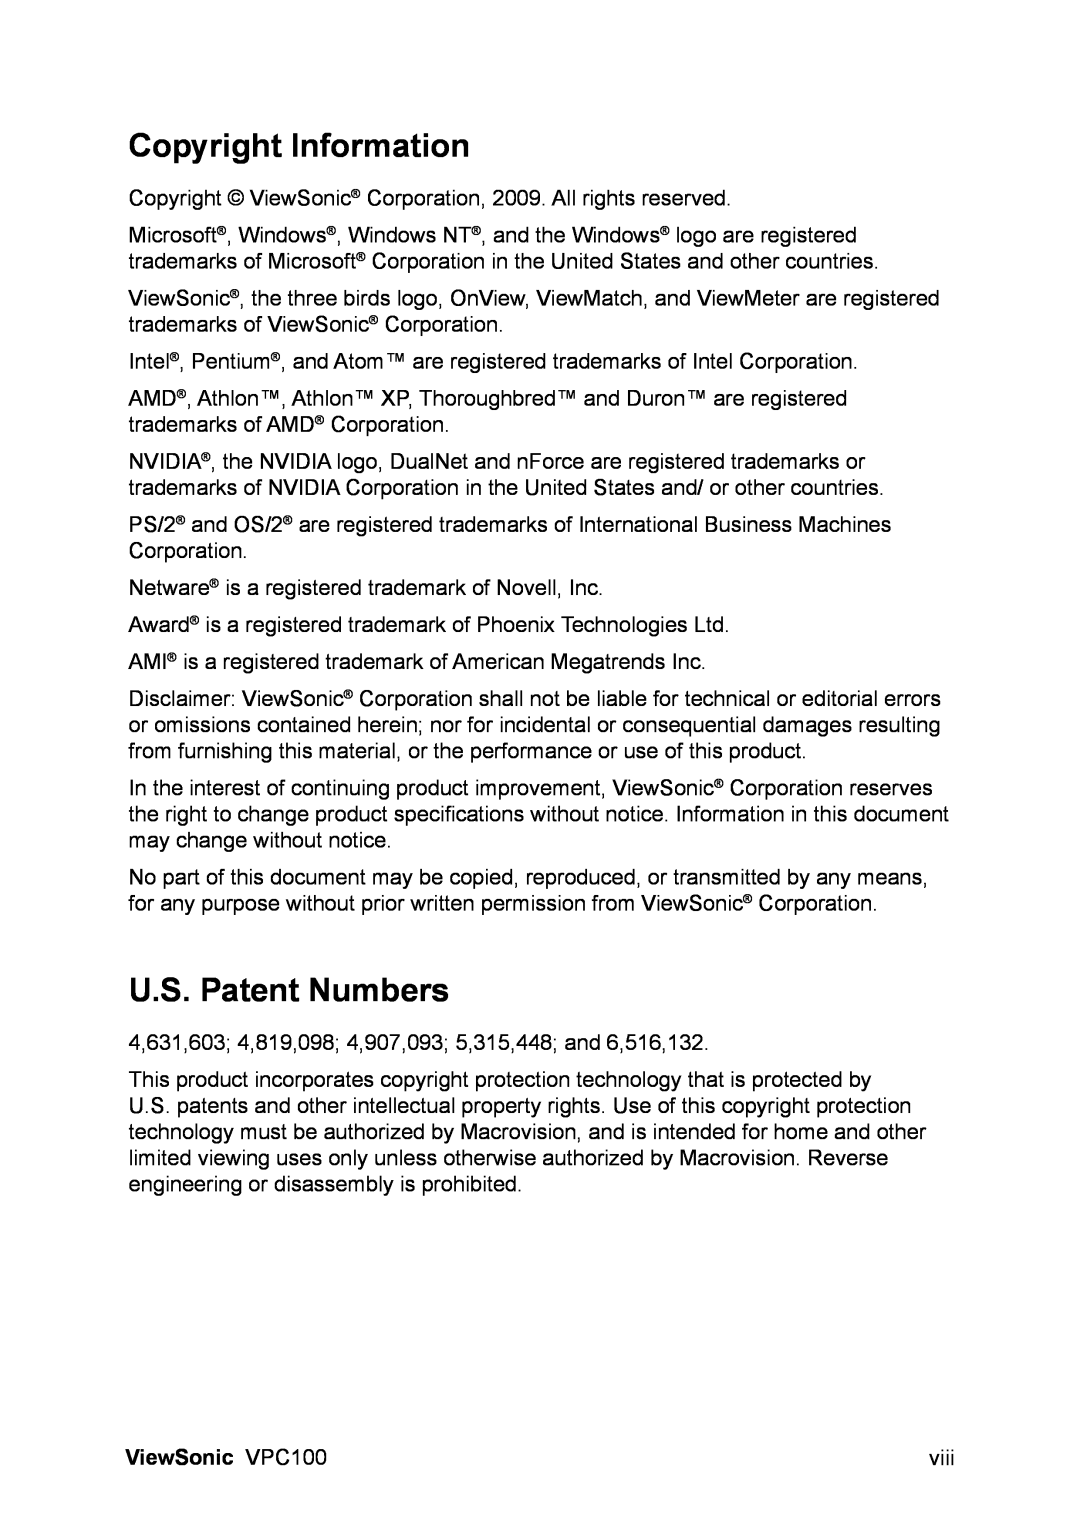 ViewSonic manual Copyright Information, U.S. Patent Numbers, ViewSonic VPC100 